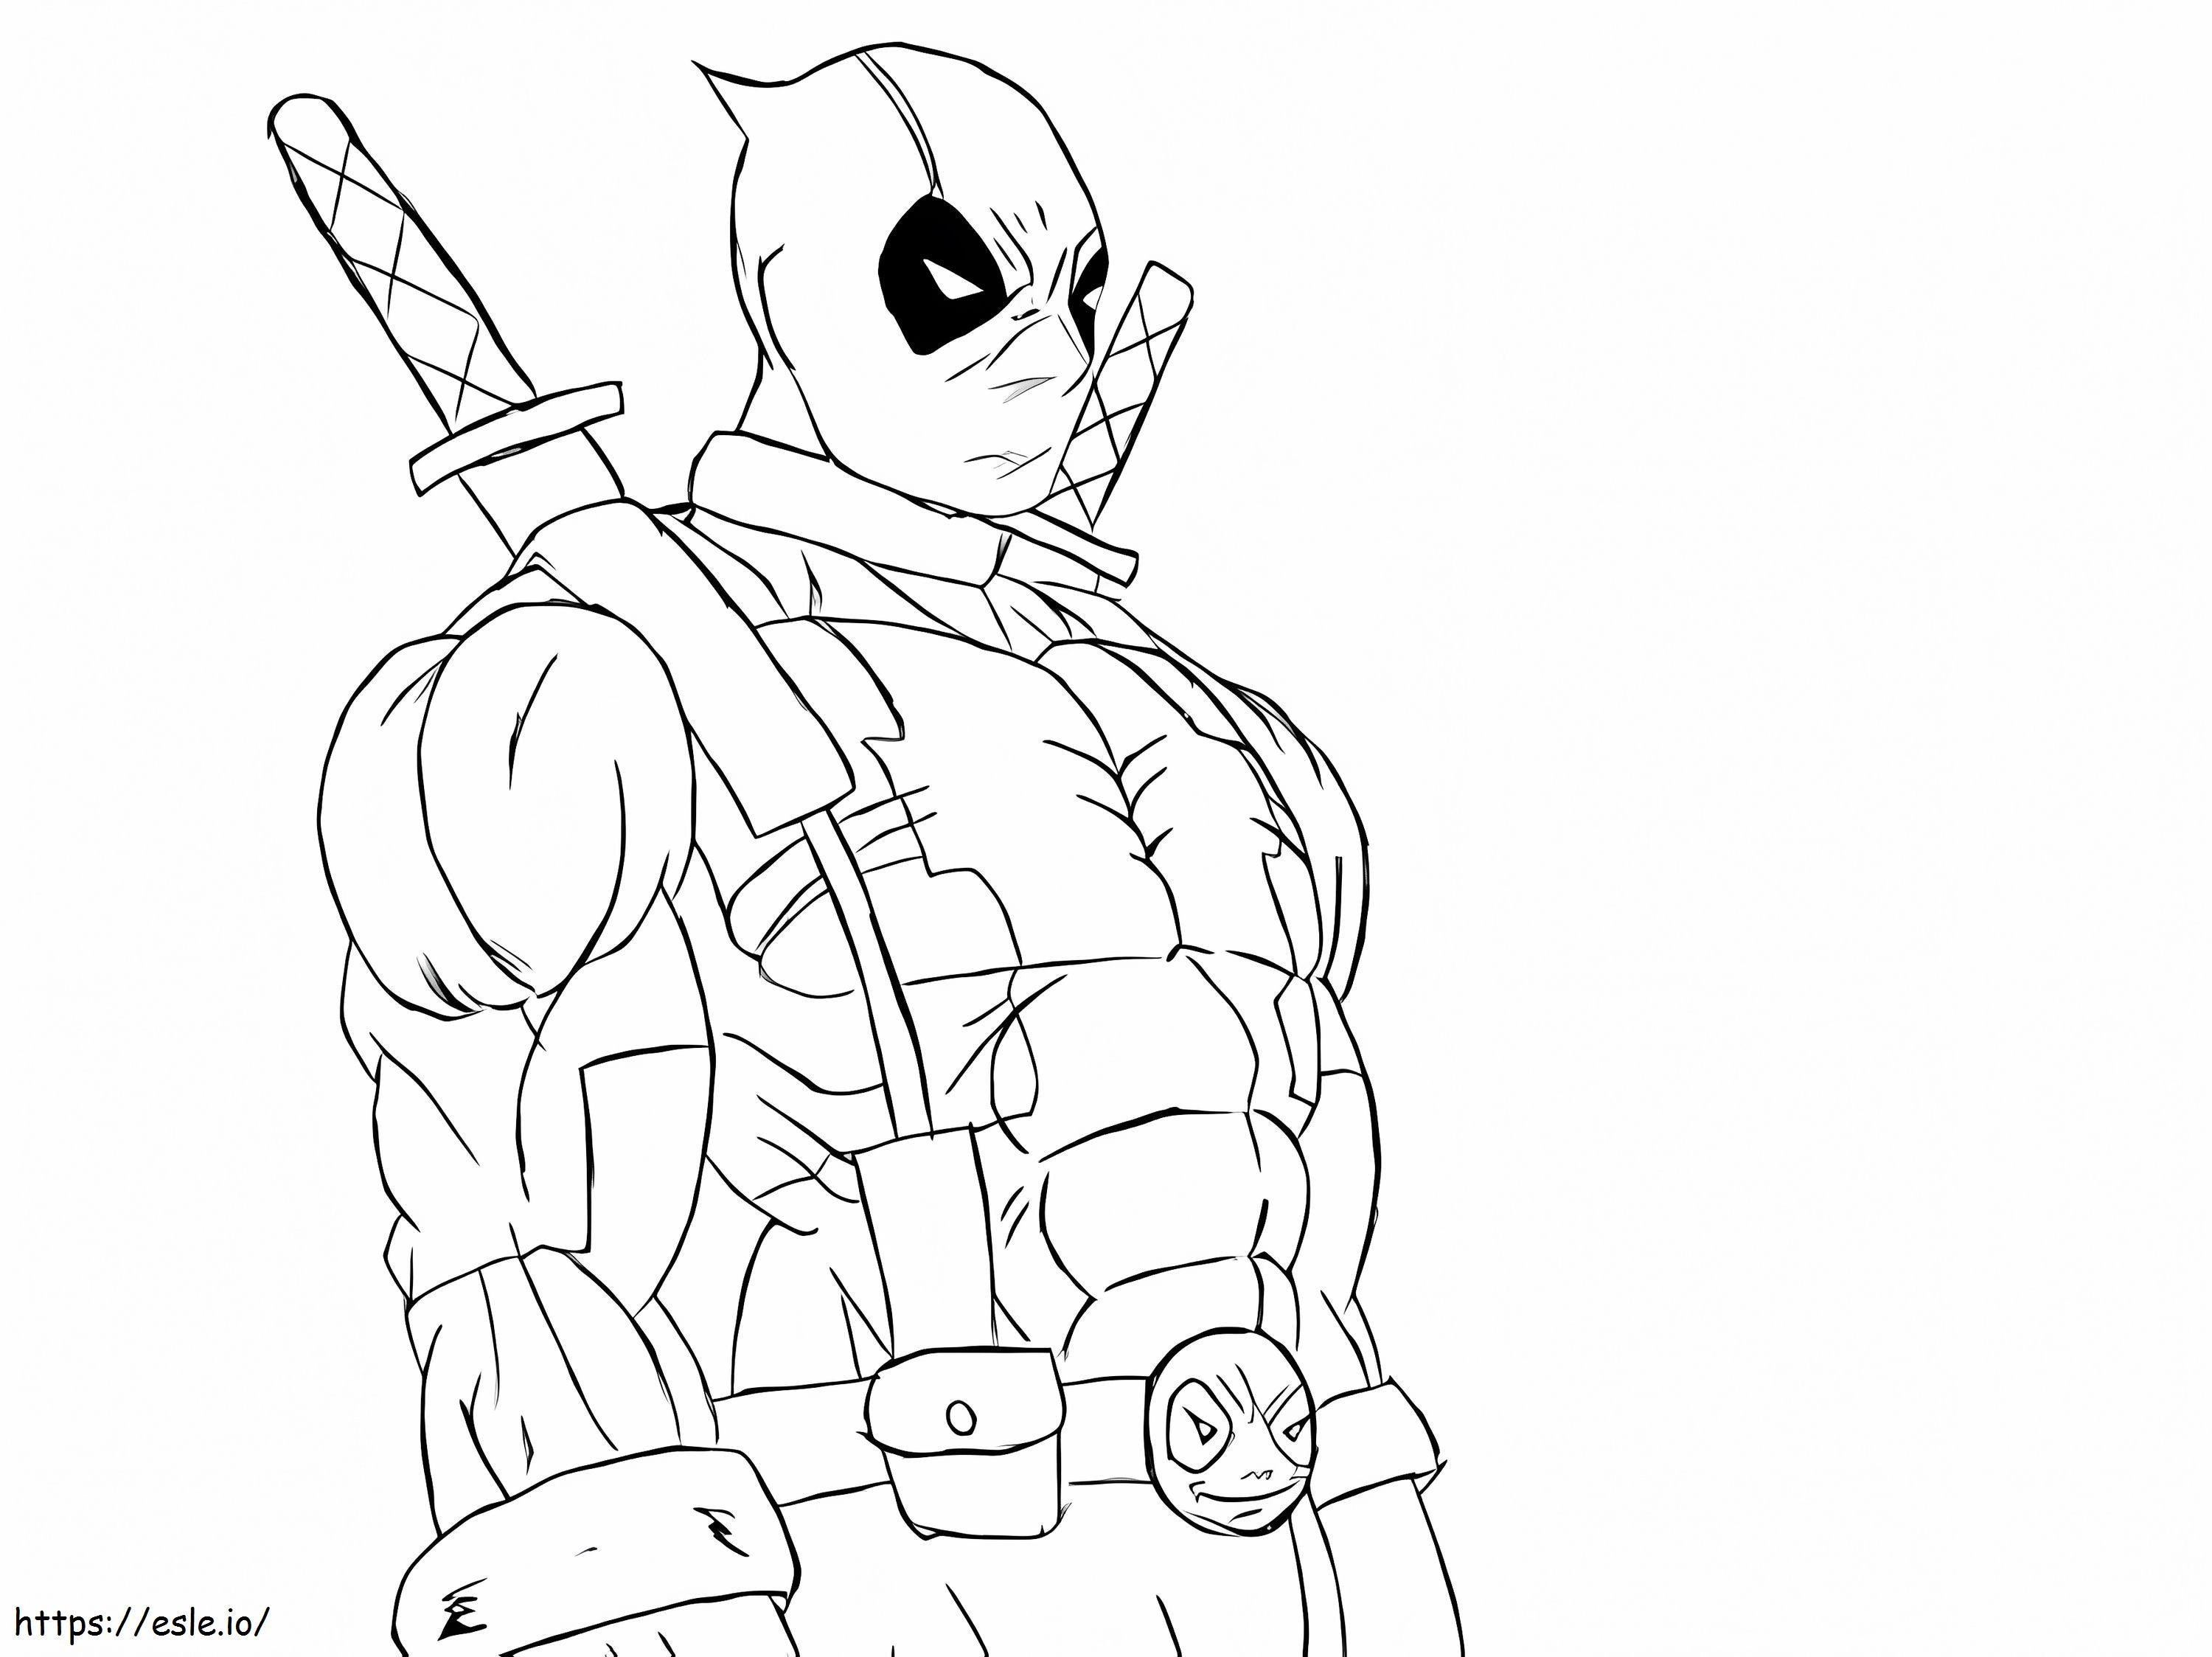 Desenho de retrato de Deadpool para colorir